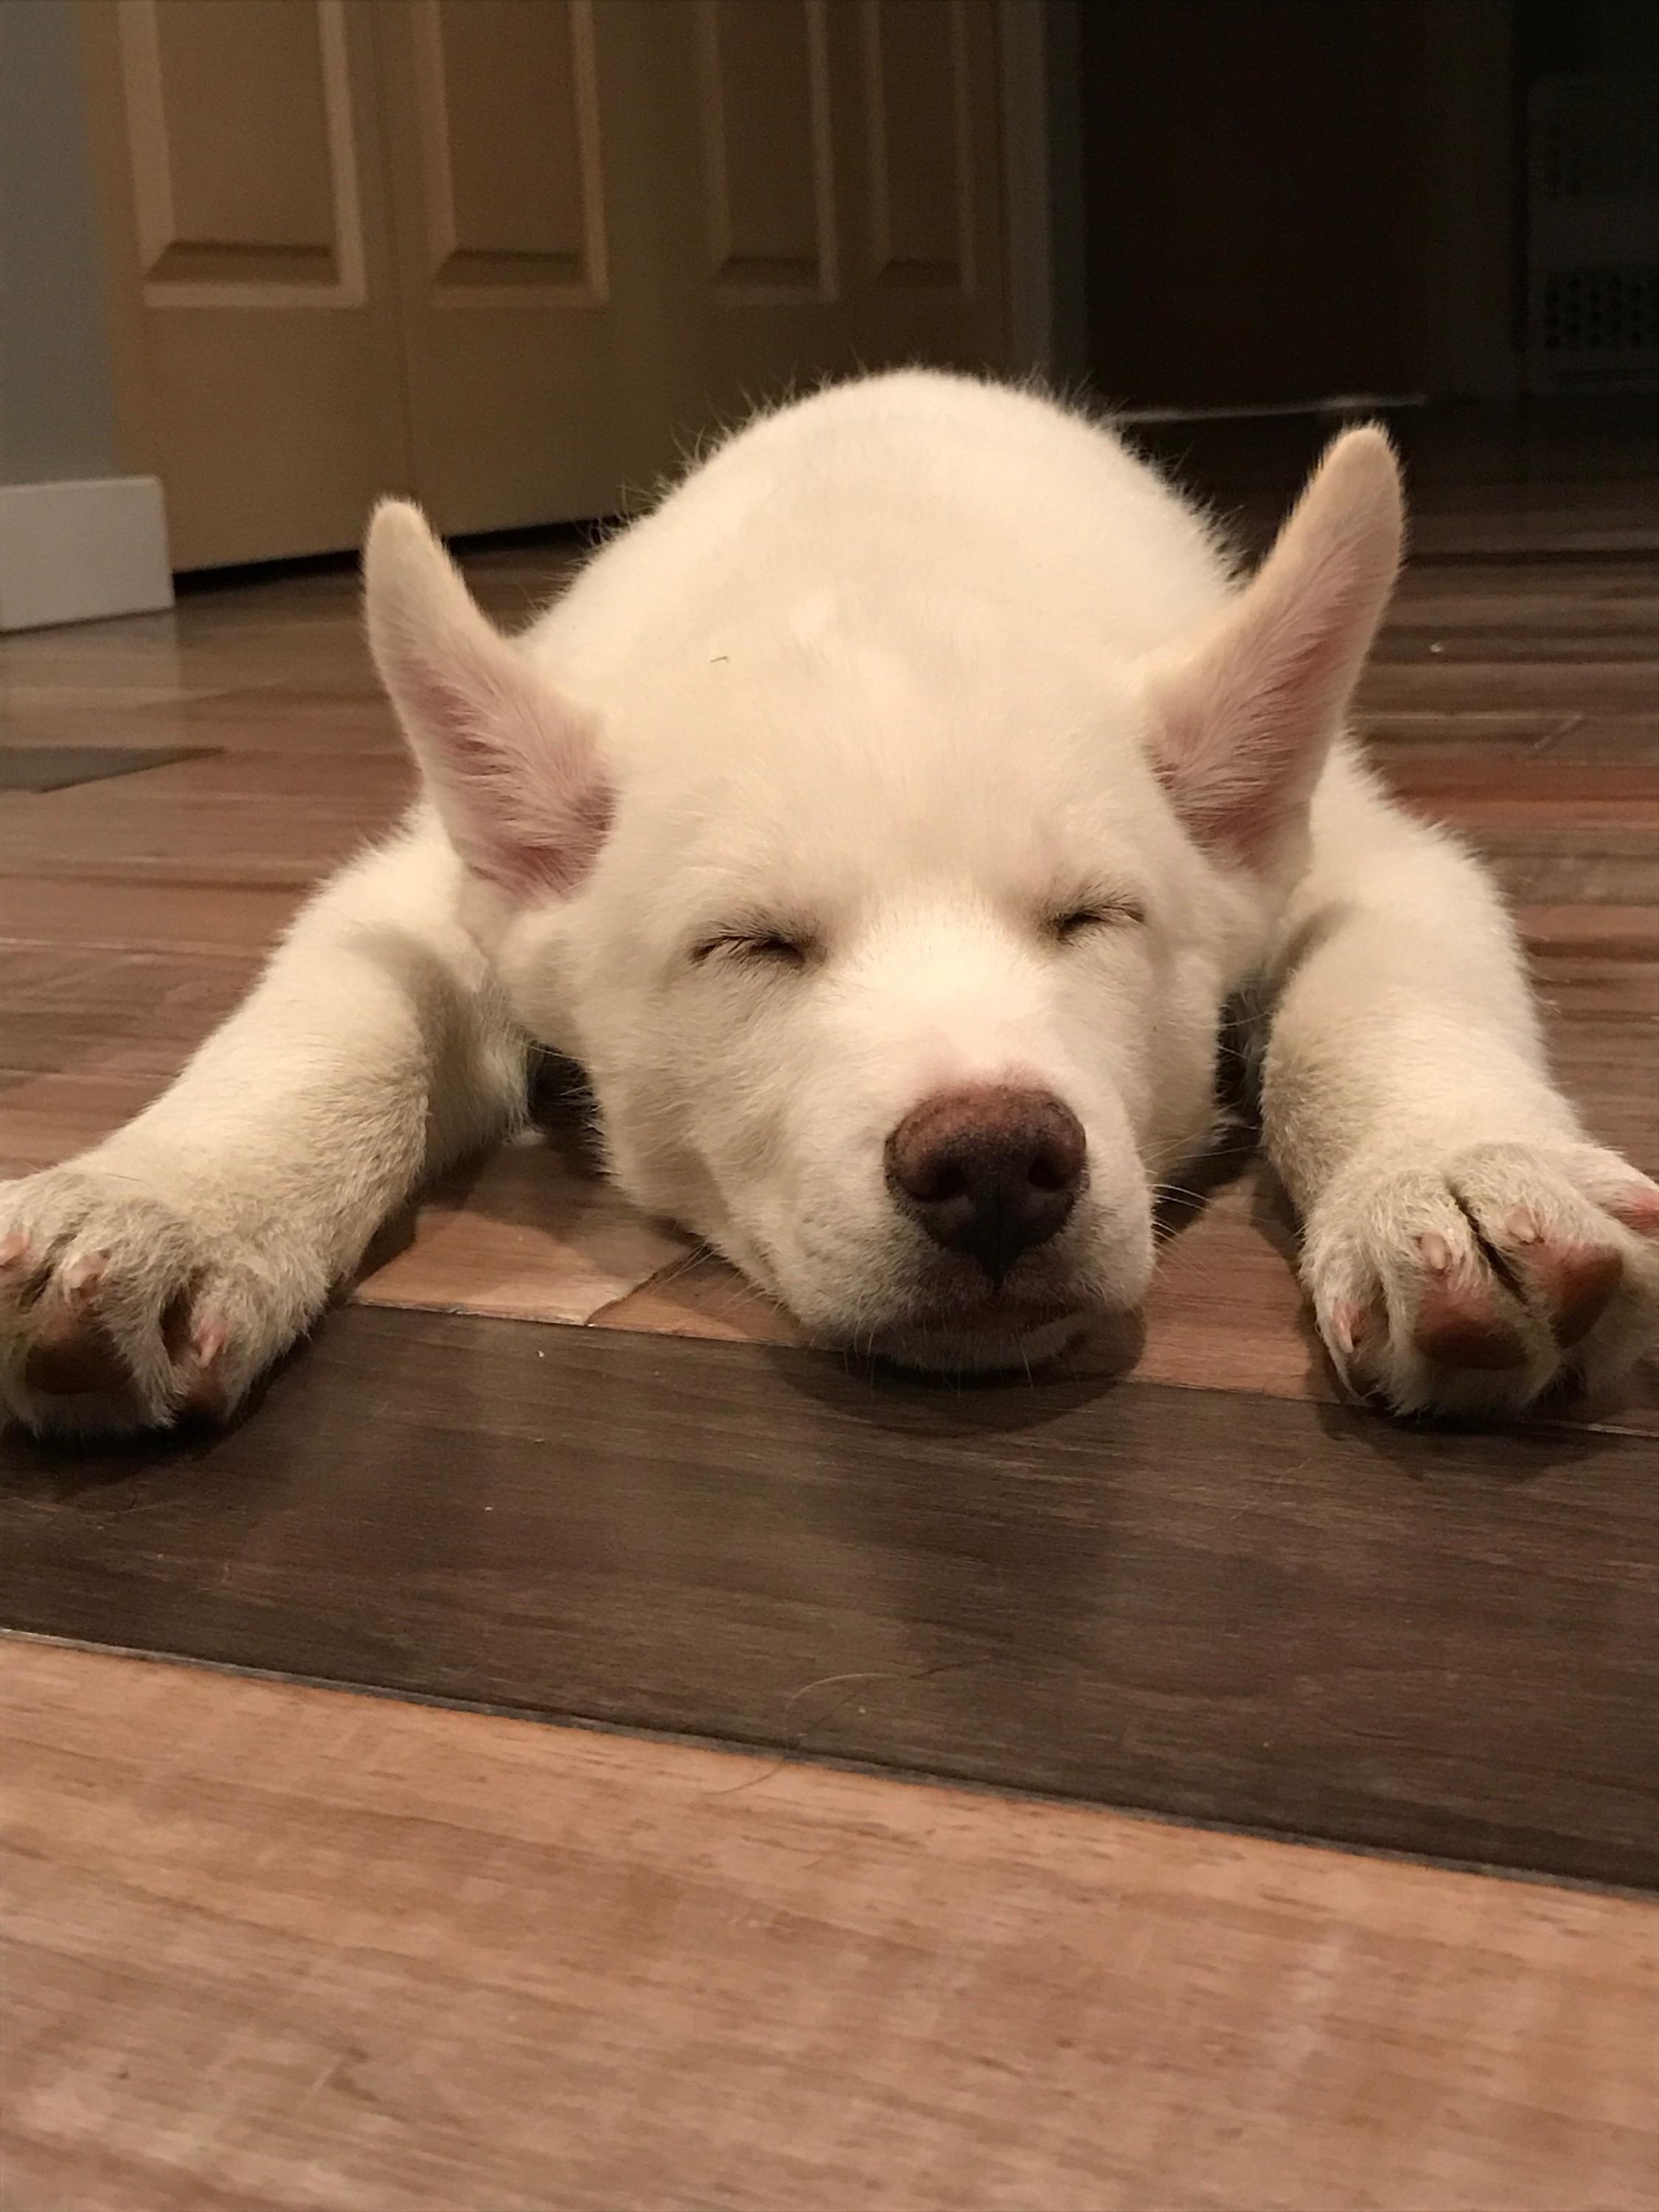 One tired little pup : Eyebleach